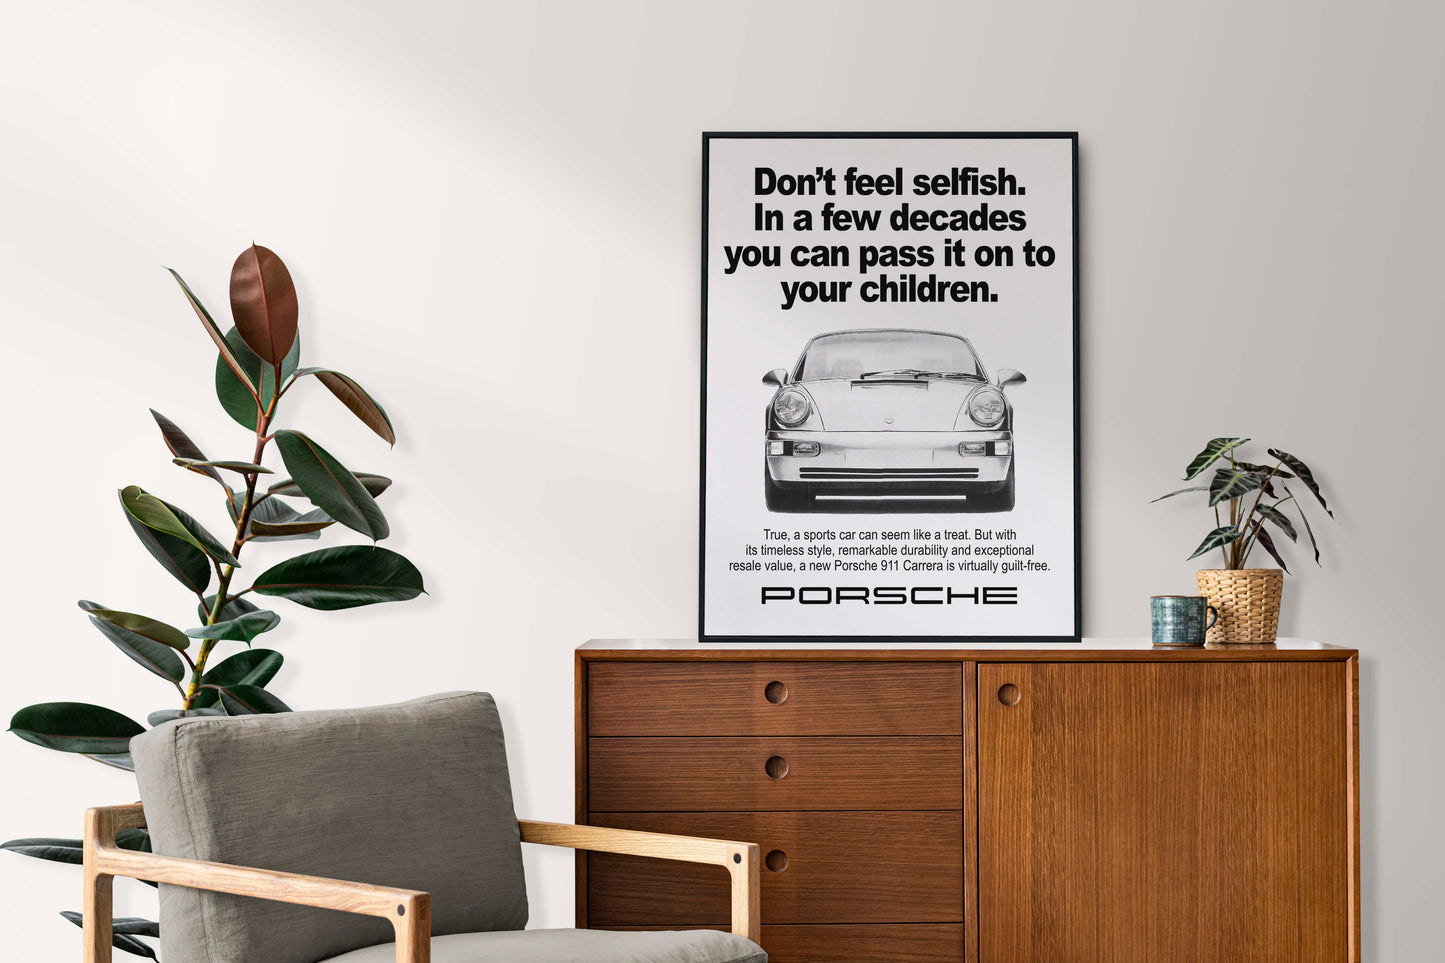 Porsche "Don't Feel Selfish" Poster